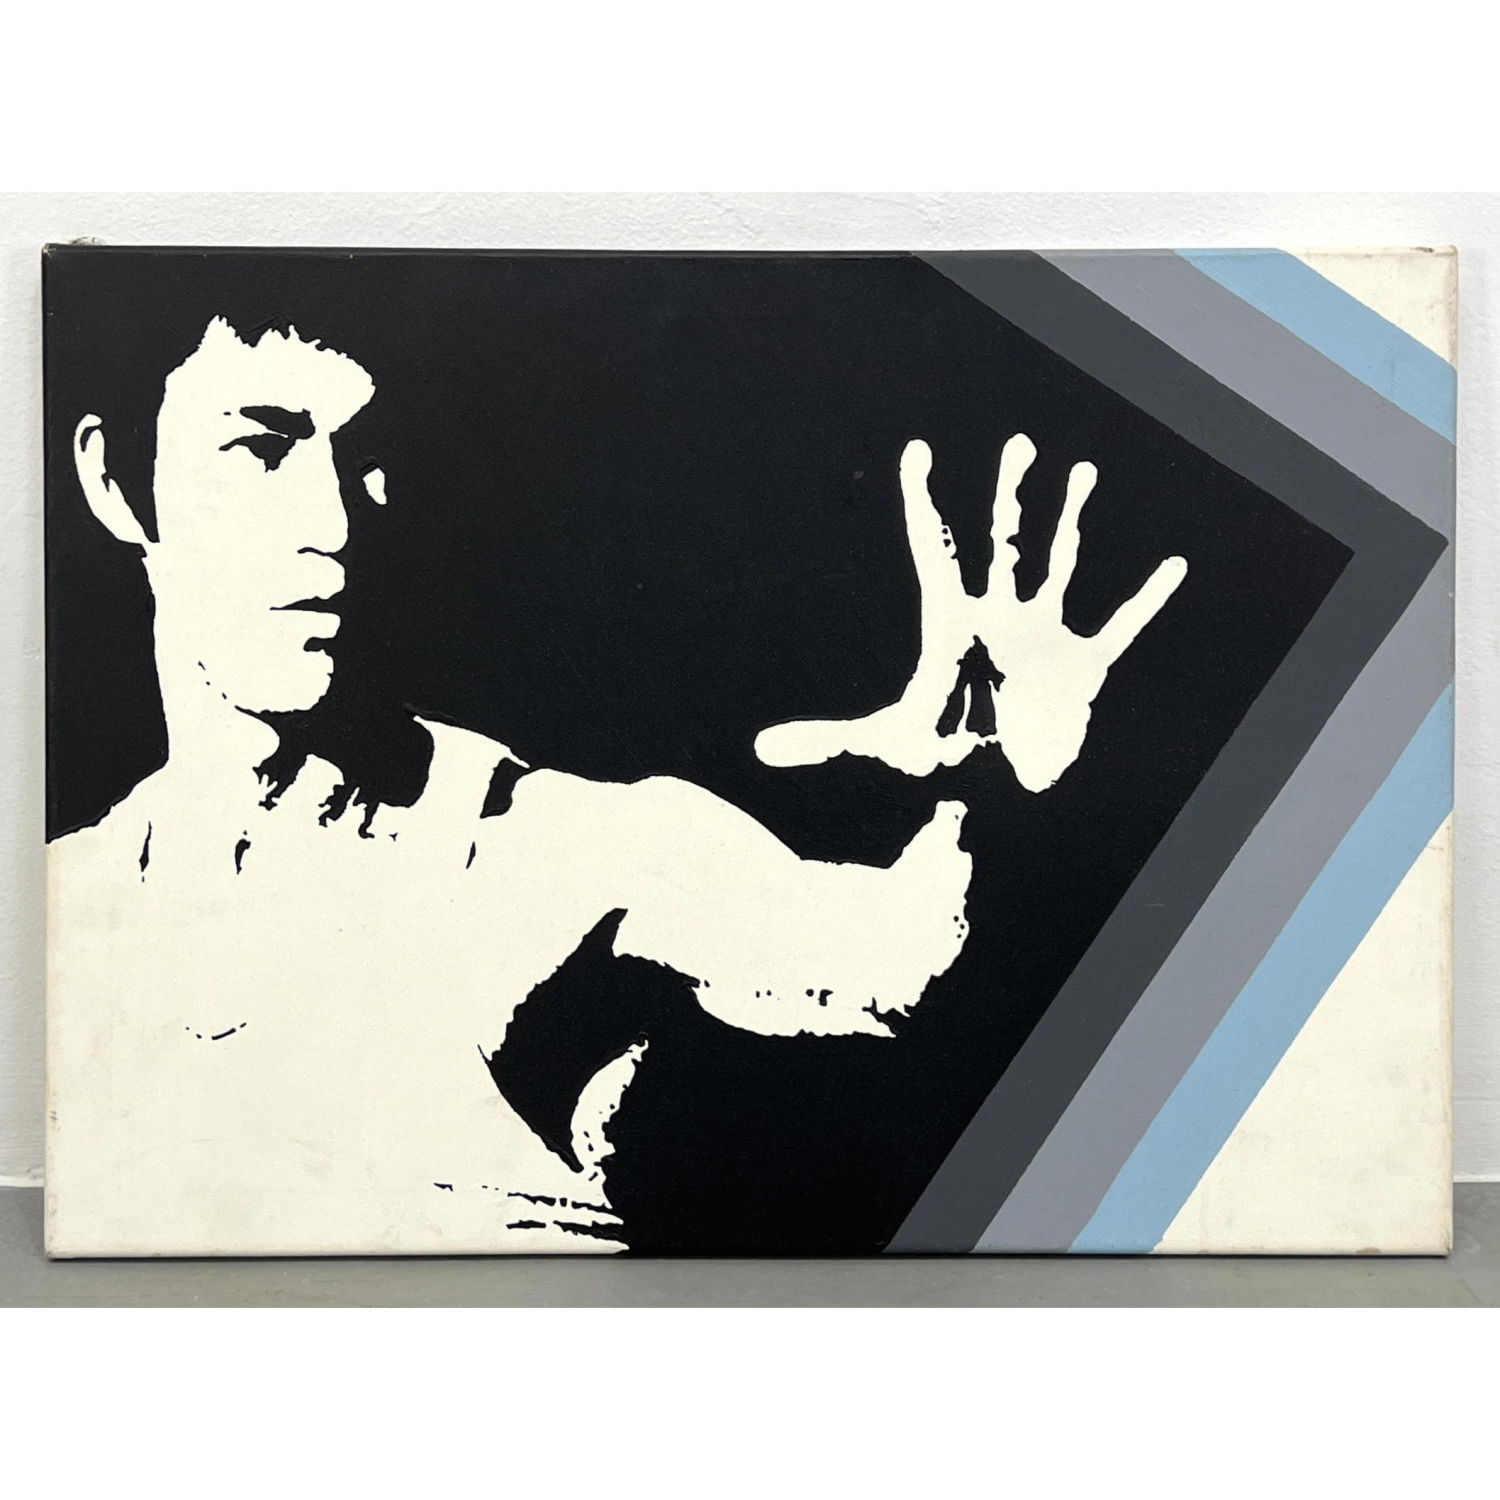 OTAKU Bruce Lee Graphic Modernist 2b9da0